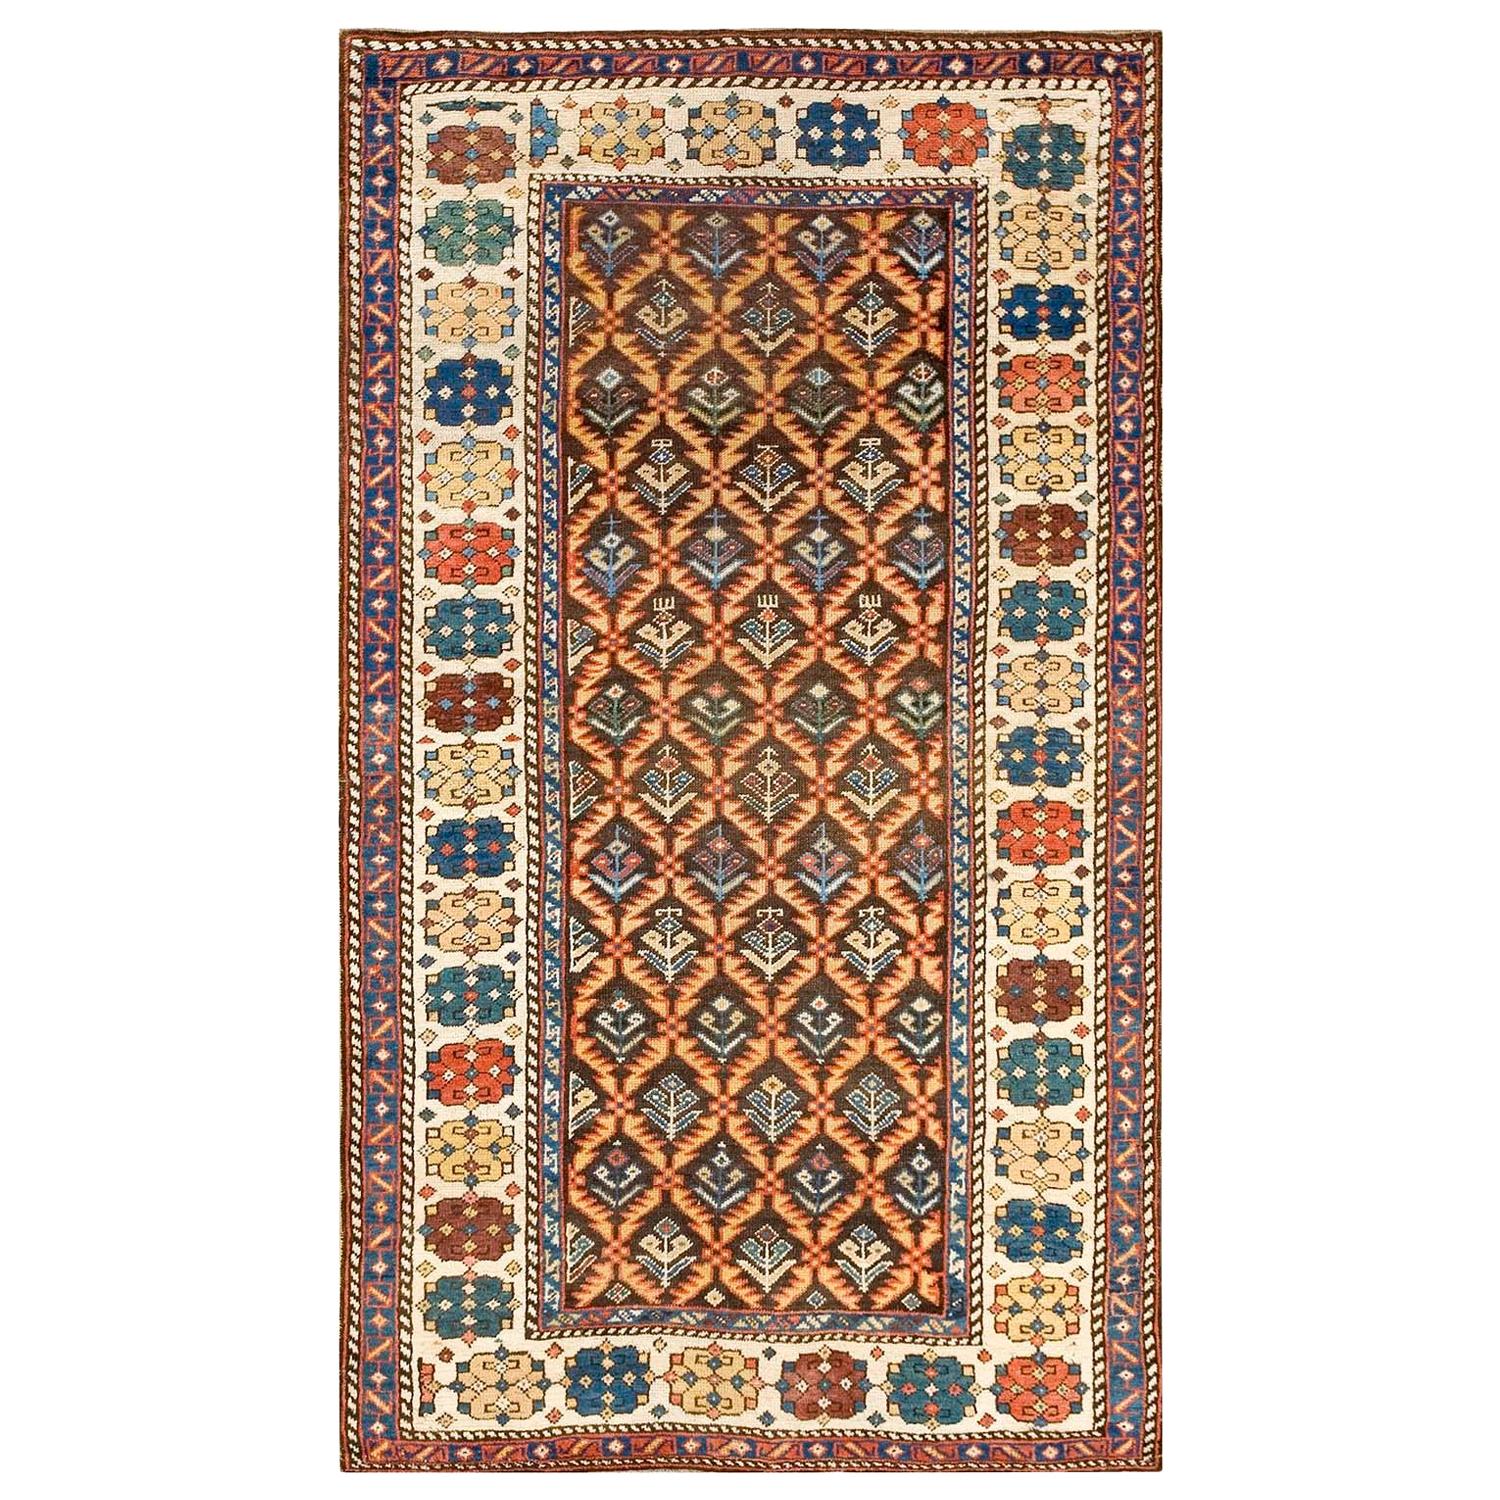 Late 19th Century Caucasian Karabagh Carpet ( 3'10" x 6'6" - 116 x 198 )